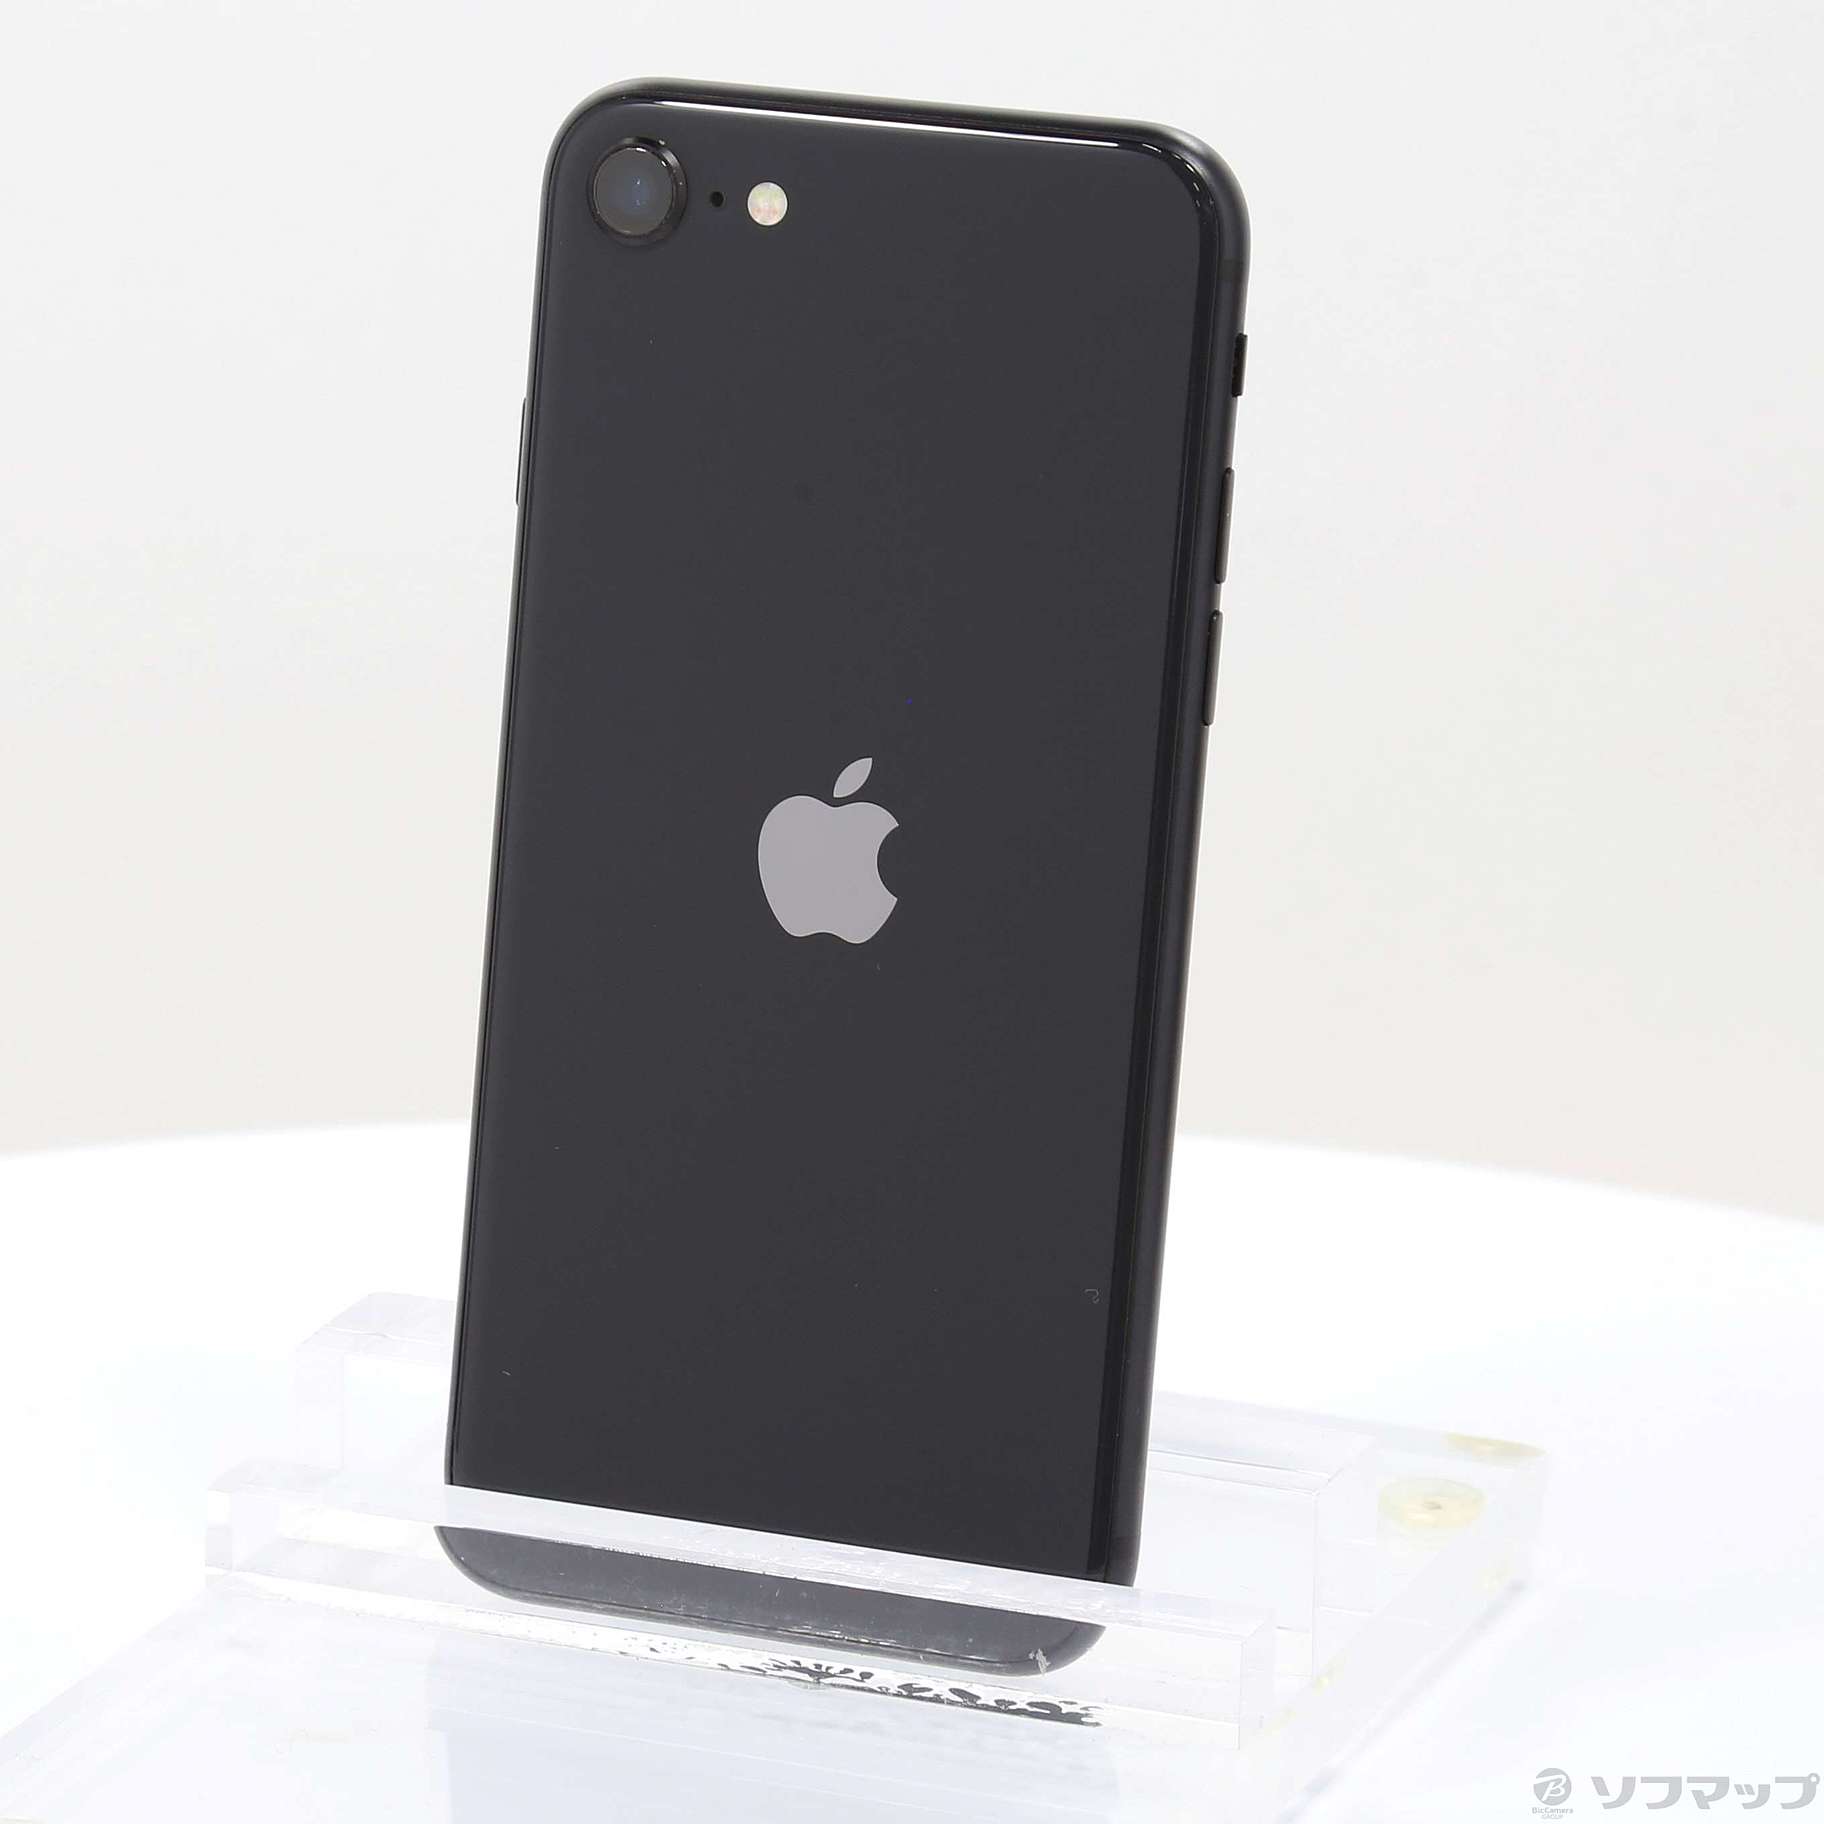 iPhone SE 第2世代 128GB 黒 SIMフリー